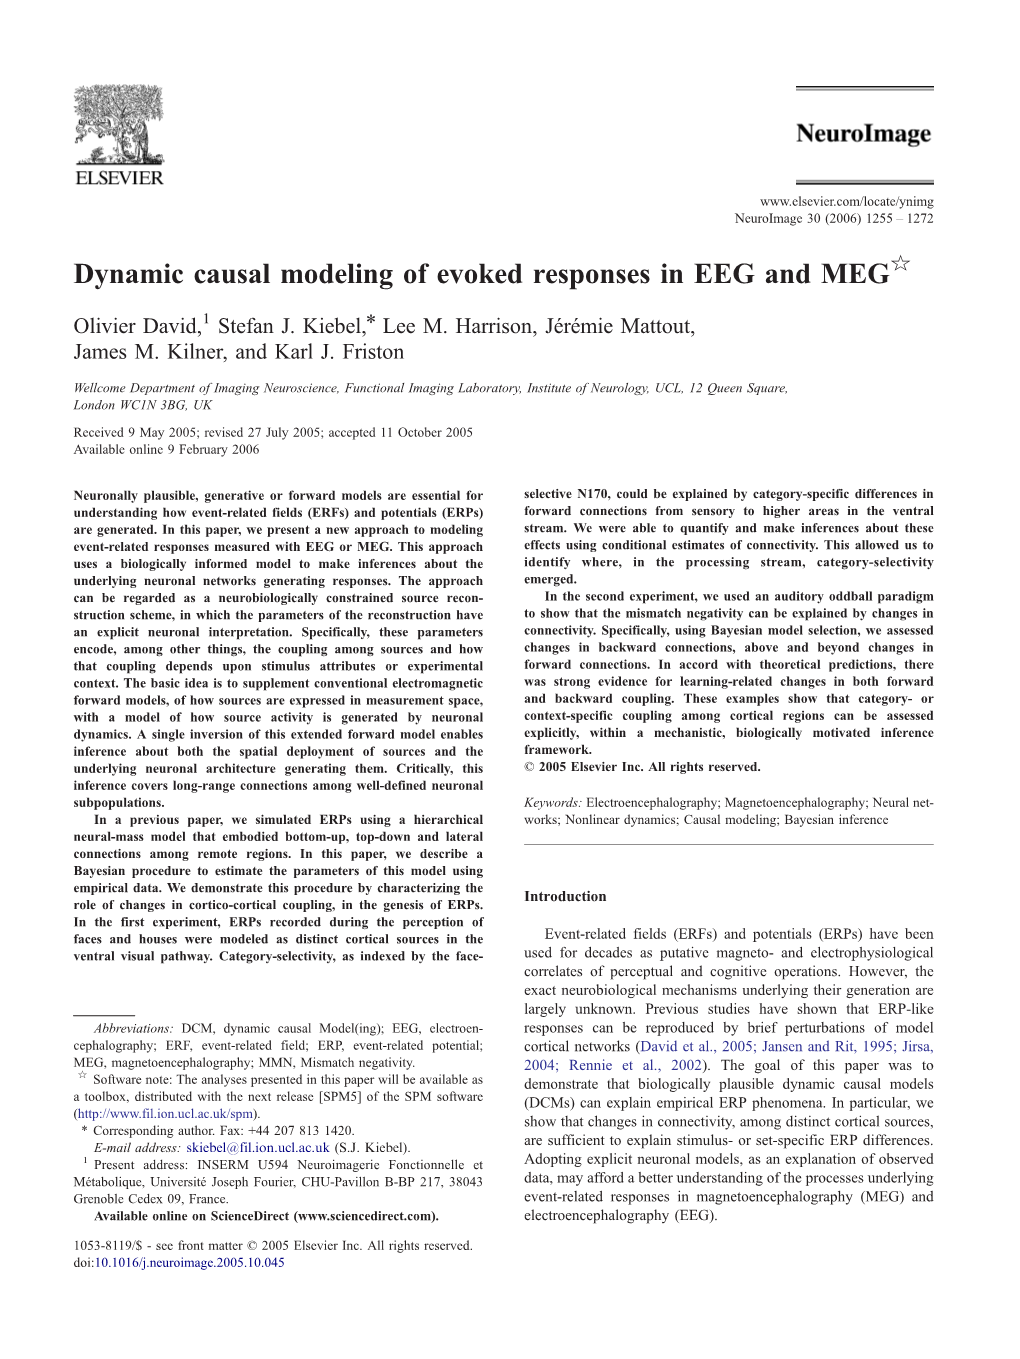 Dynamic Causal Modeling of Evoked Responses in EEG and Megi